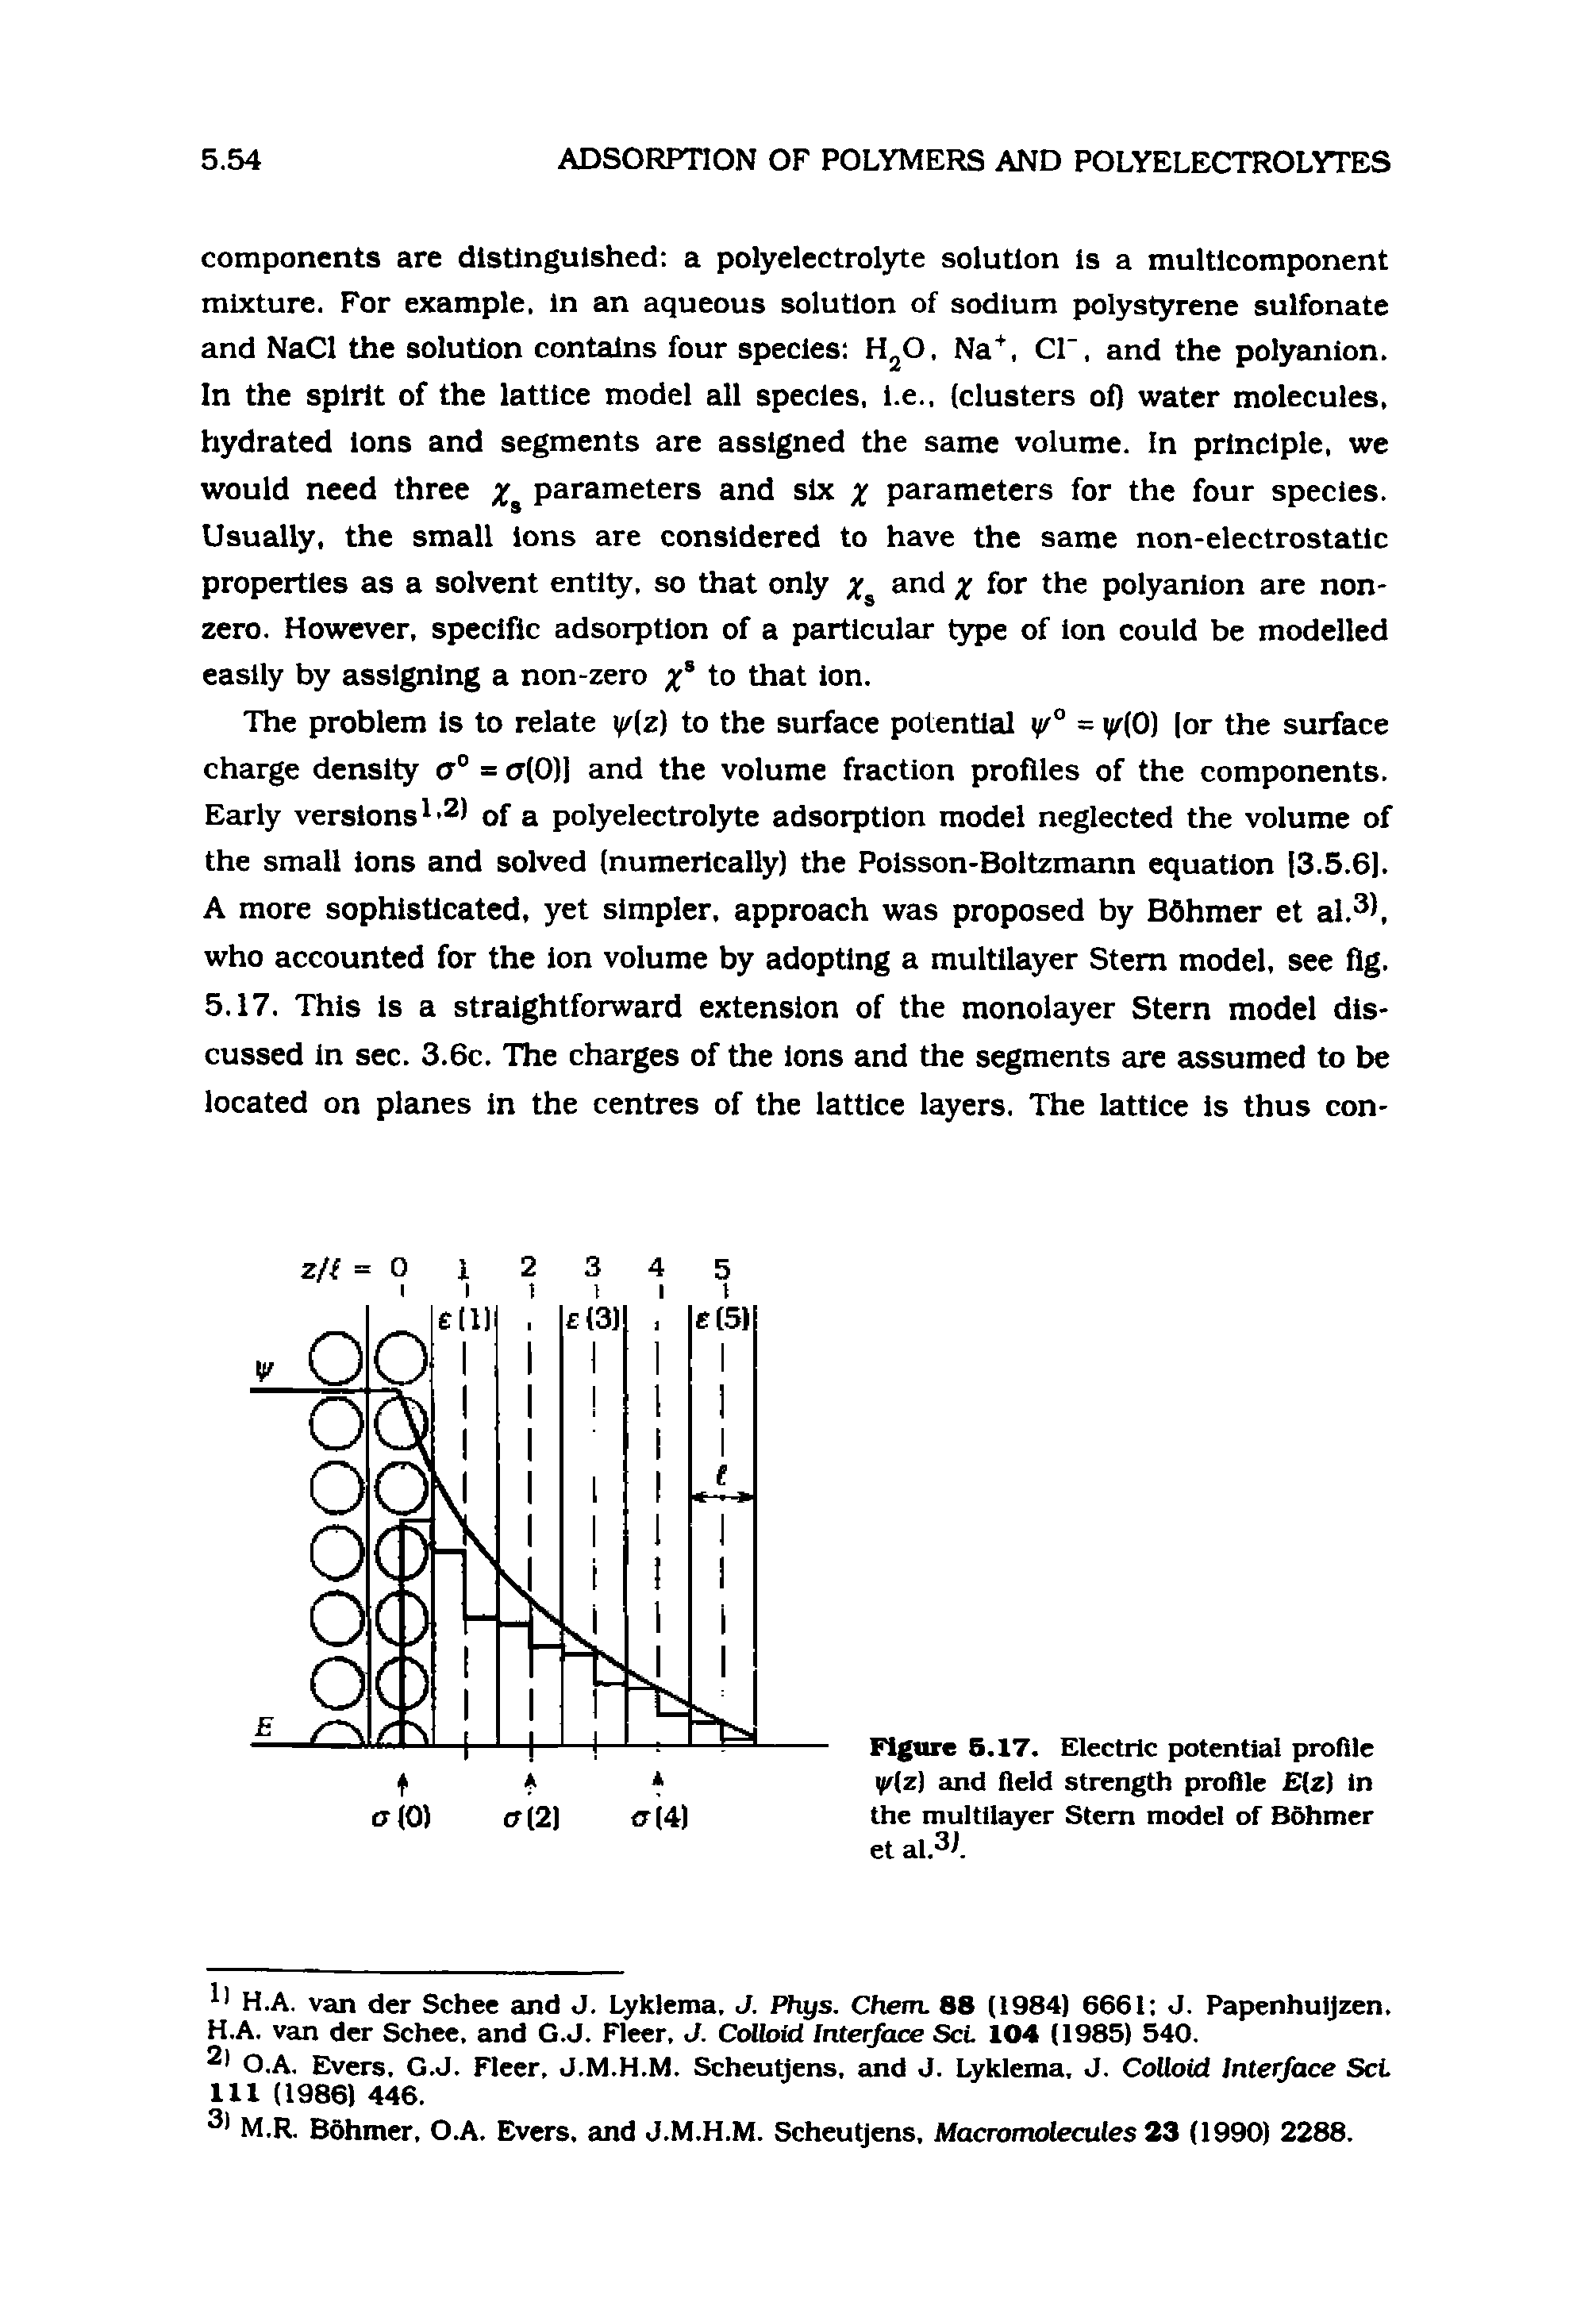 Figure 5.17. Electric potential profile yflz) auid field strength profile E(z) in the multilayer Stem model of Bohmer et al.21.